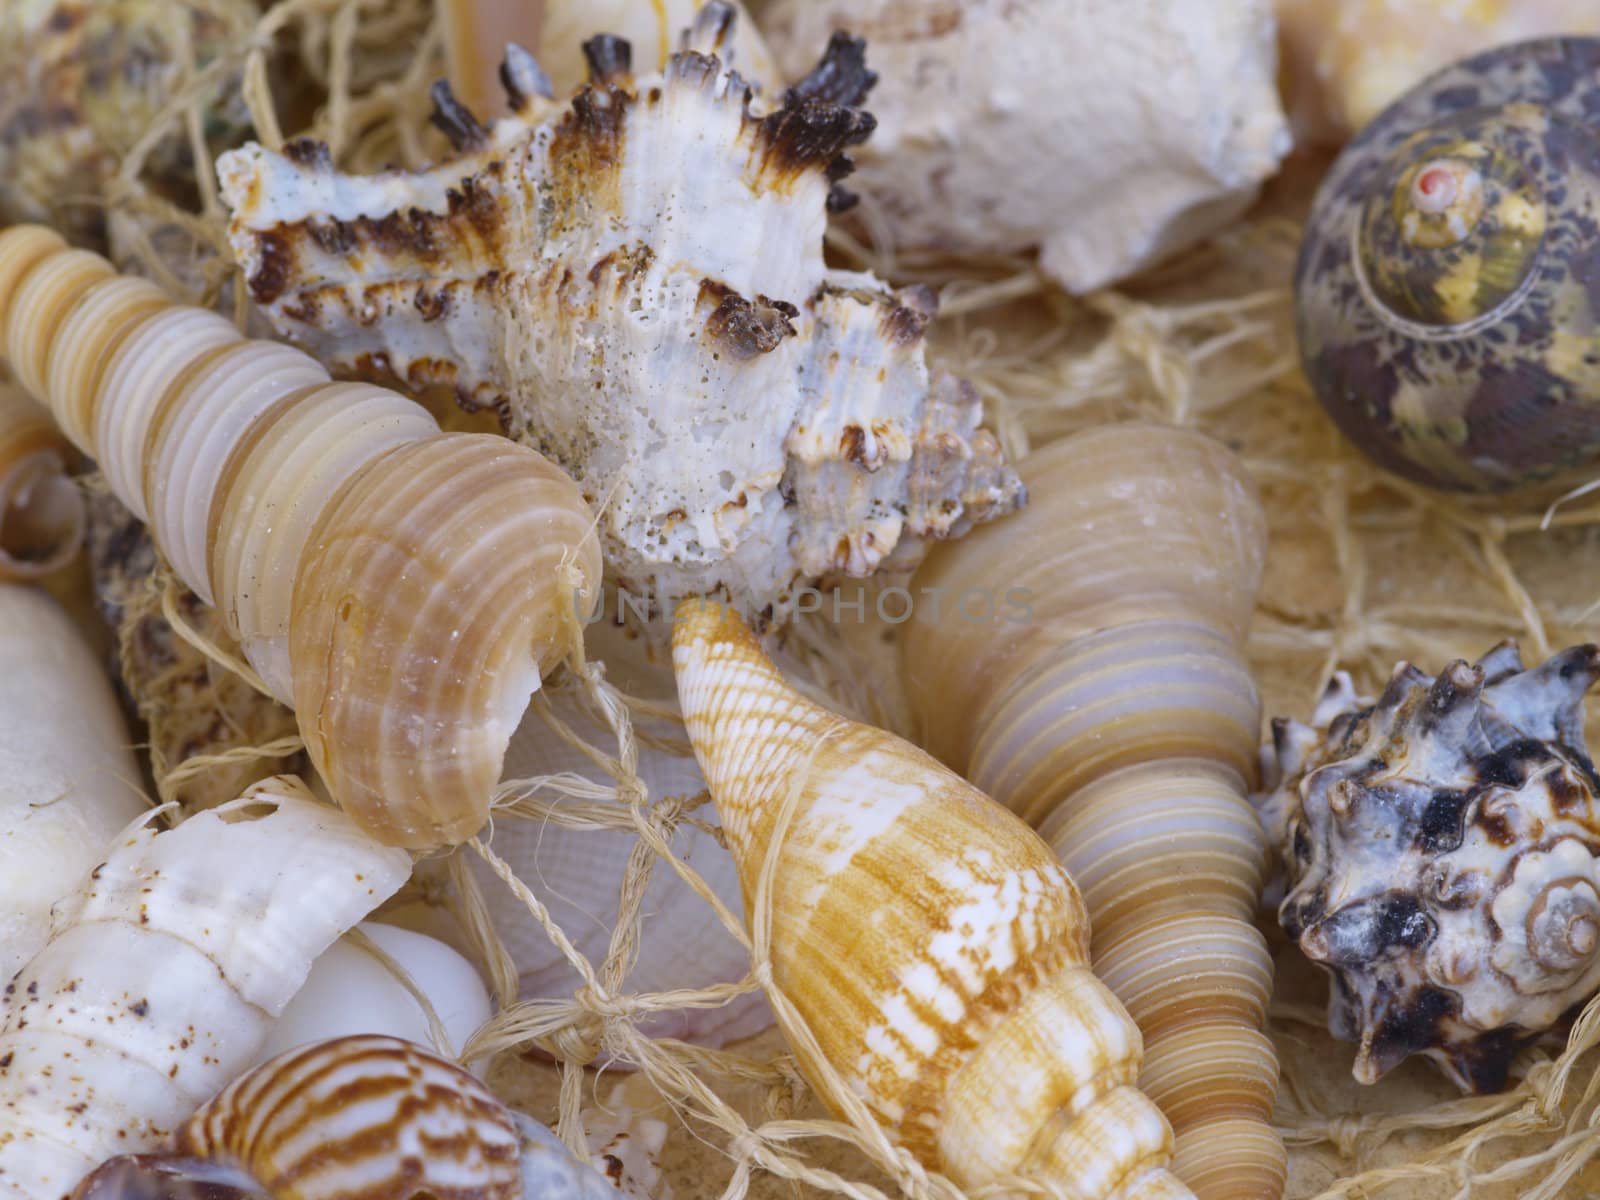 Snail shells by derausdo